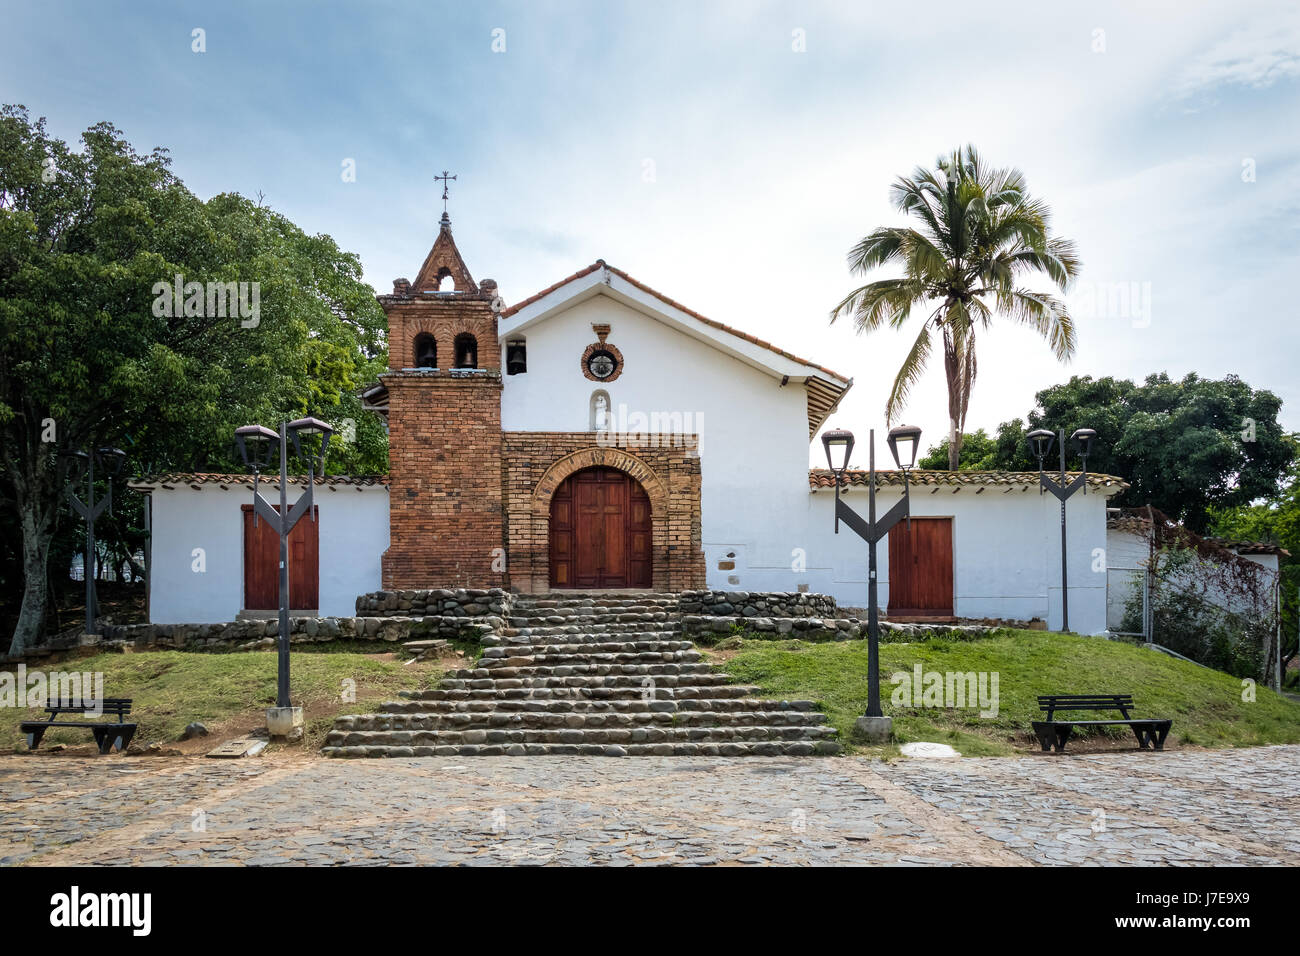 Famosa iglesia colombiana fotografías e imágenes de alta resolución - Alamy